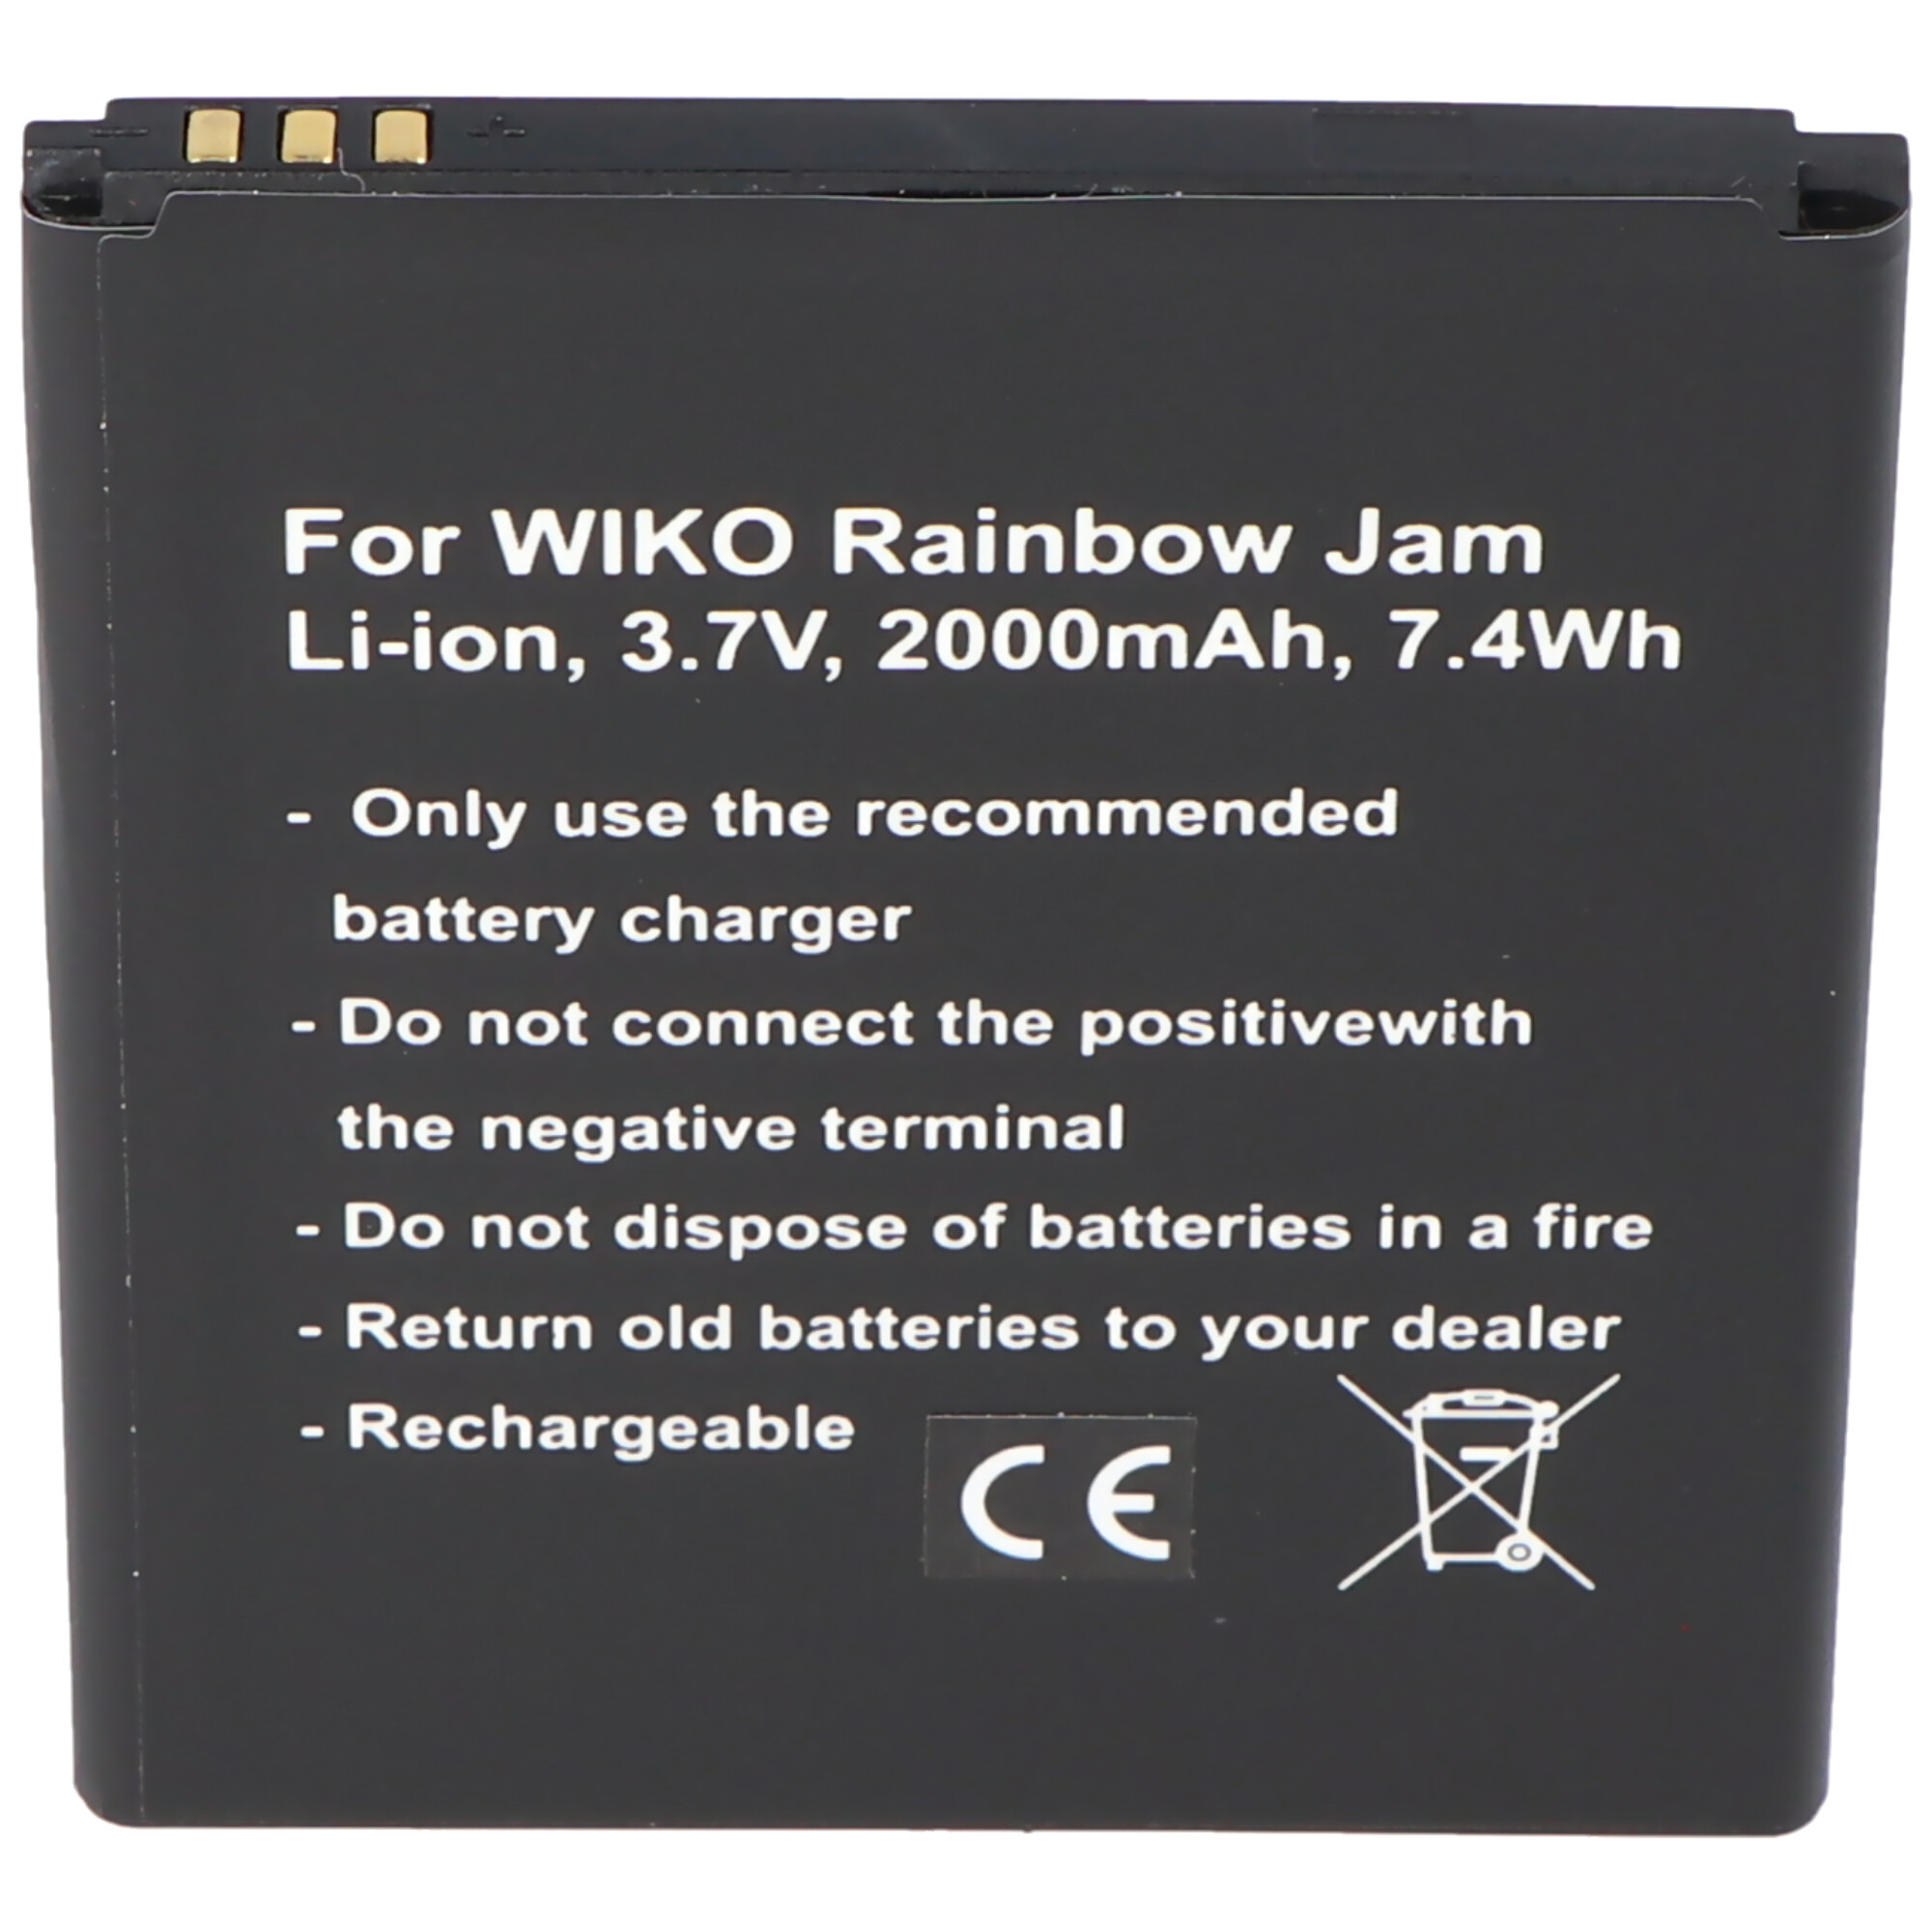 Rainbow ACCUCELL Rainbow Wiko Jam, für 70,0 x Akku passend - 4,7mm 5222, Lithium-Ionen 60,2 x Akku Wiko Li-Ion Handy-Akku, Jam mAh 4G, 2000